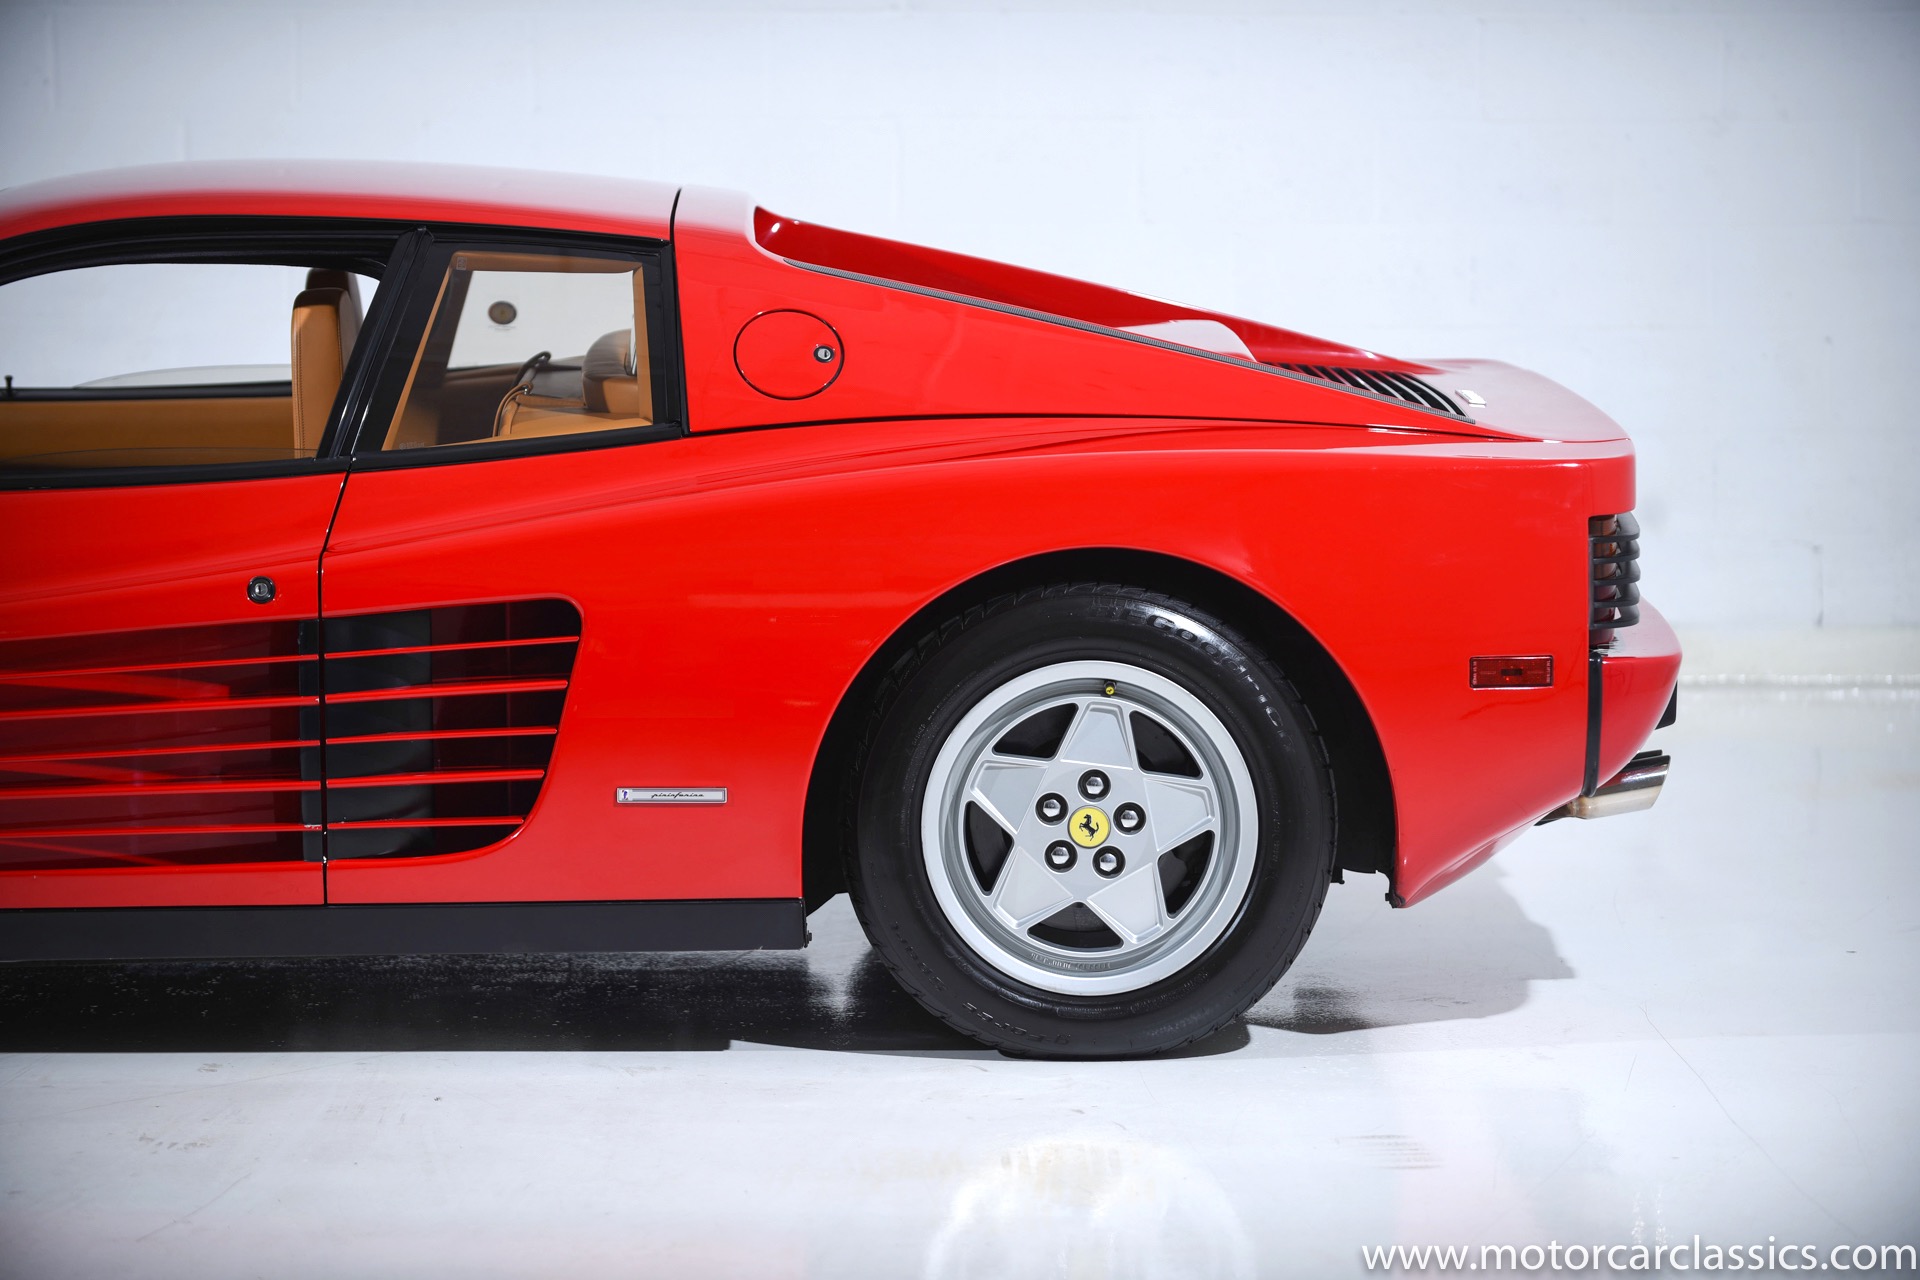 Used 1991 Ferrari Testarossa For Sale ($99,900) | Motorcar Classics ...